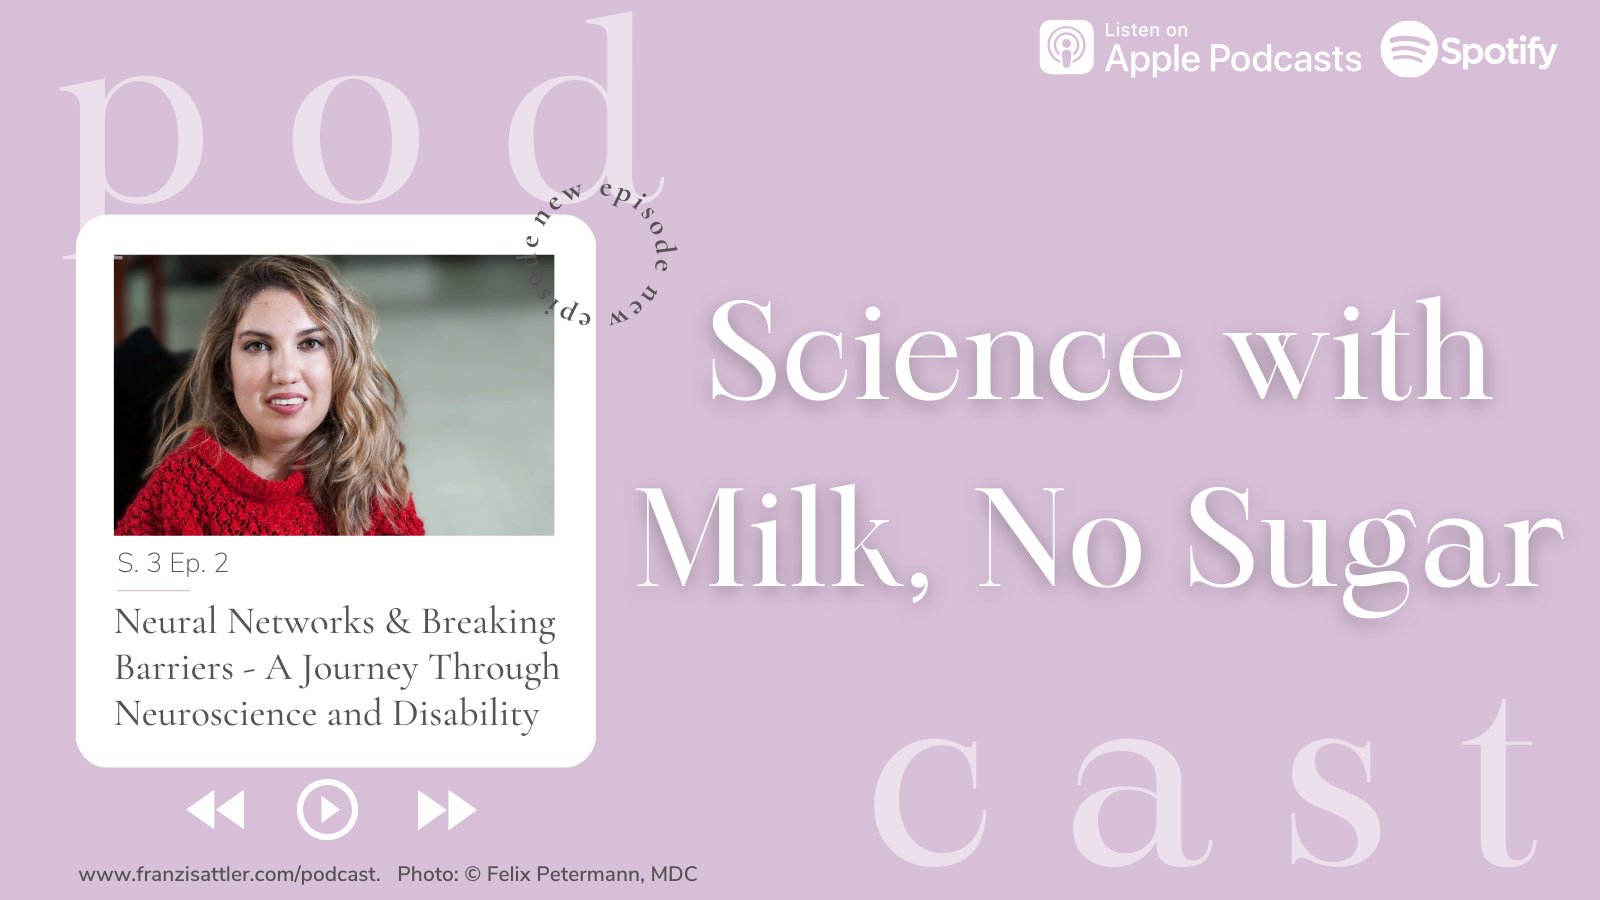 "Science with Milk, No Sugar" Podcast